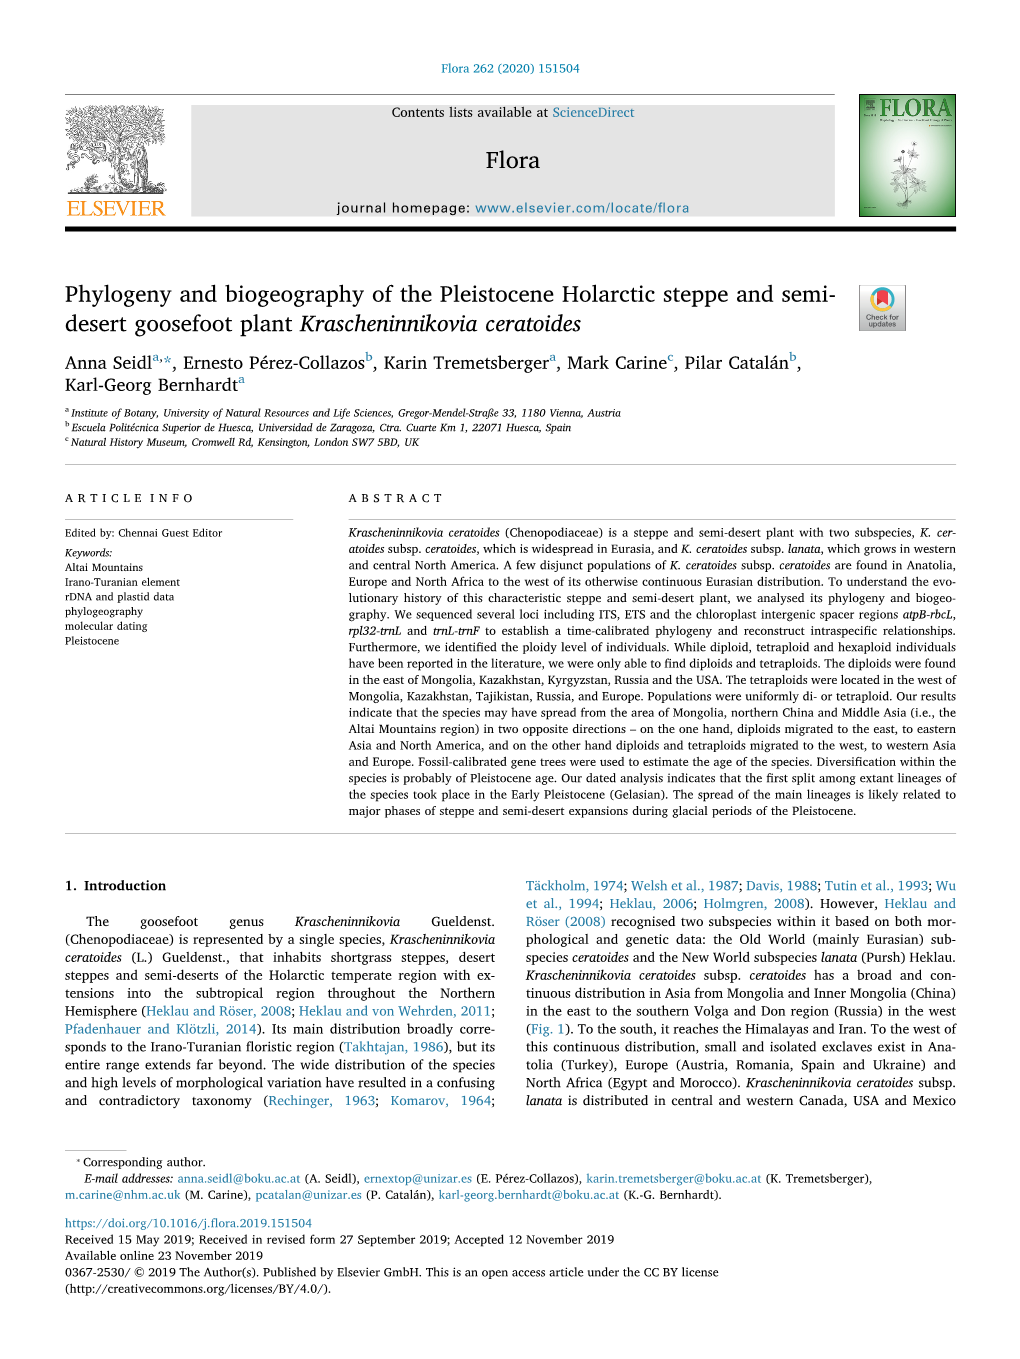 Phylogeny and Biogeography of the Pleistocene Holarctic Steppe and Semi-Desert Goosefoot Plant Krascheninnikovia Ceratoides